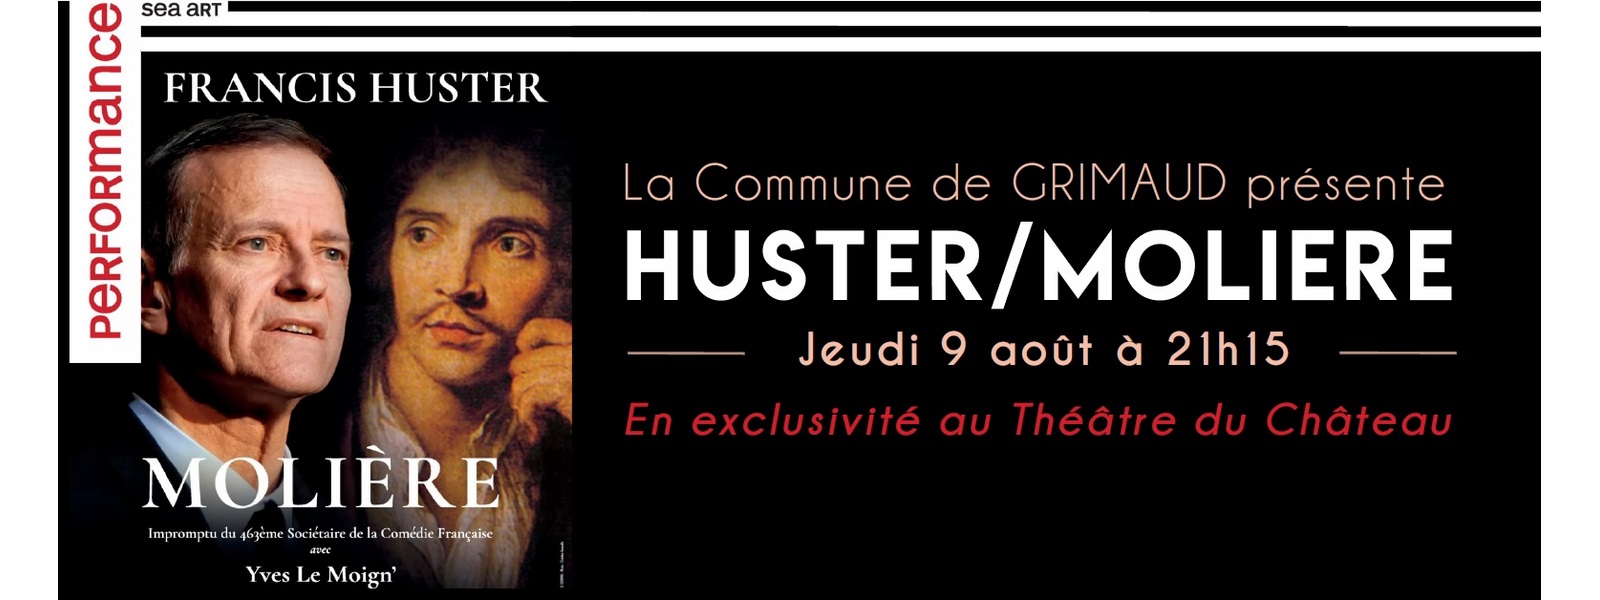 Culture : Francis HUSTER au théâtre du château - Jeudi 9 août 2018 à 21h15